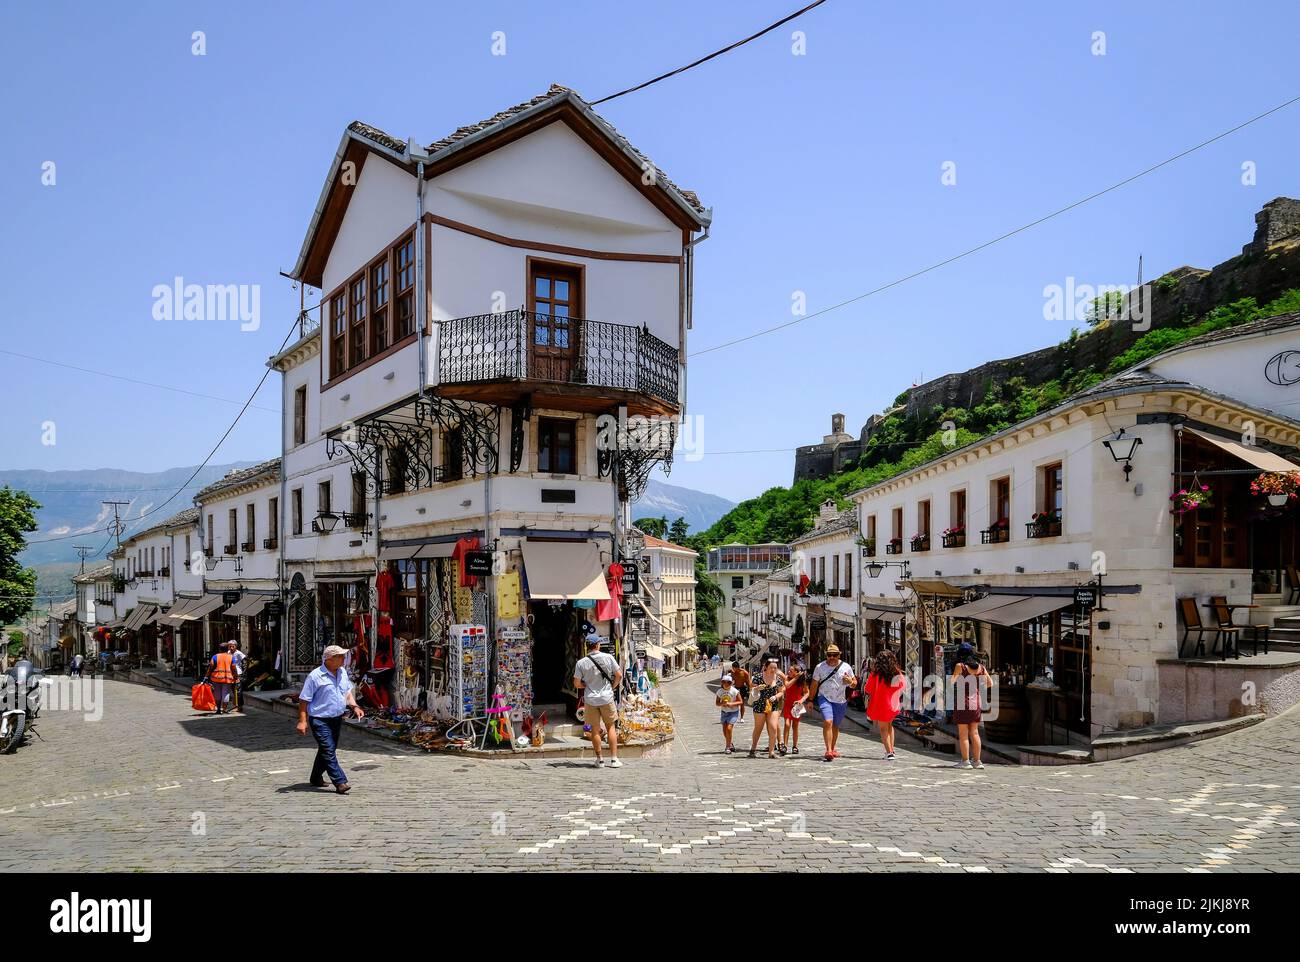 City of Gjirokastra, Gjirokastra, Albania - Tourists visit the historic old town of the mountain city of Gjirokastra, UNESCO World Heritage Site. Stock Photo